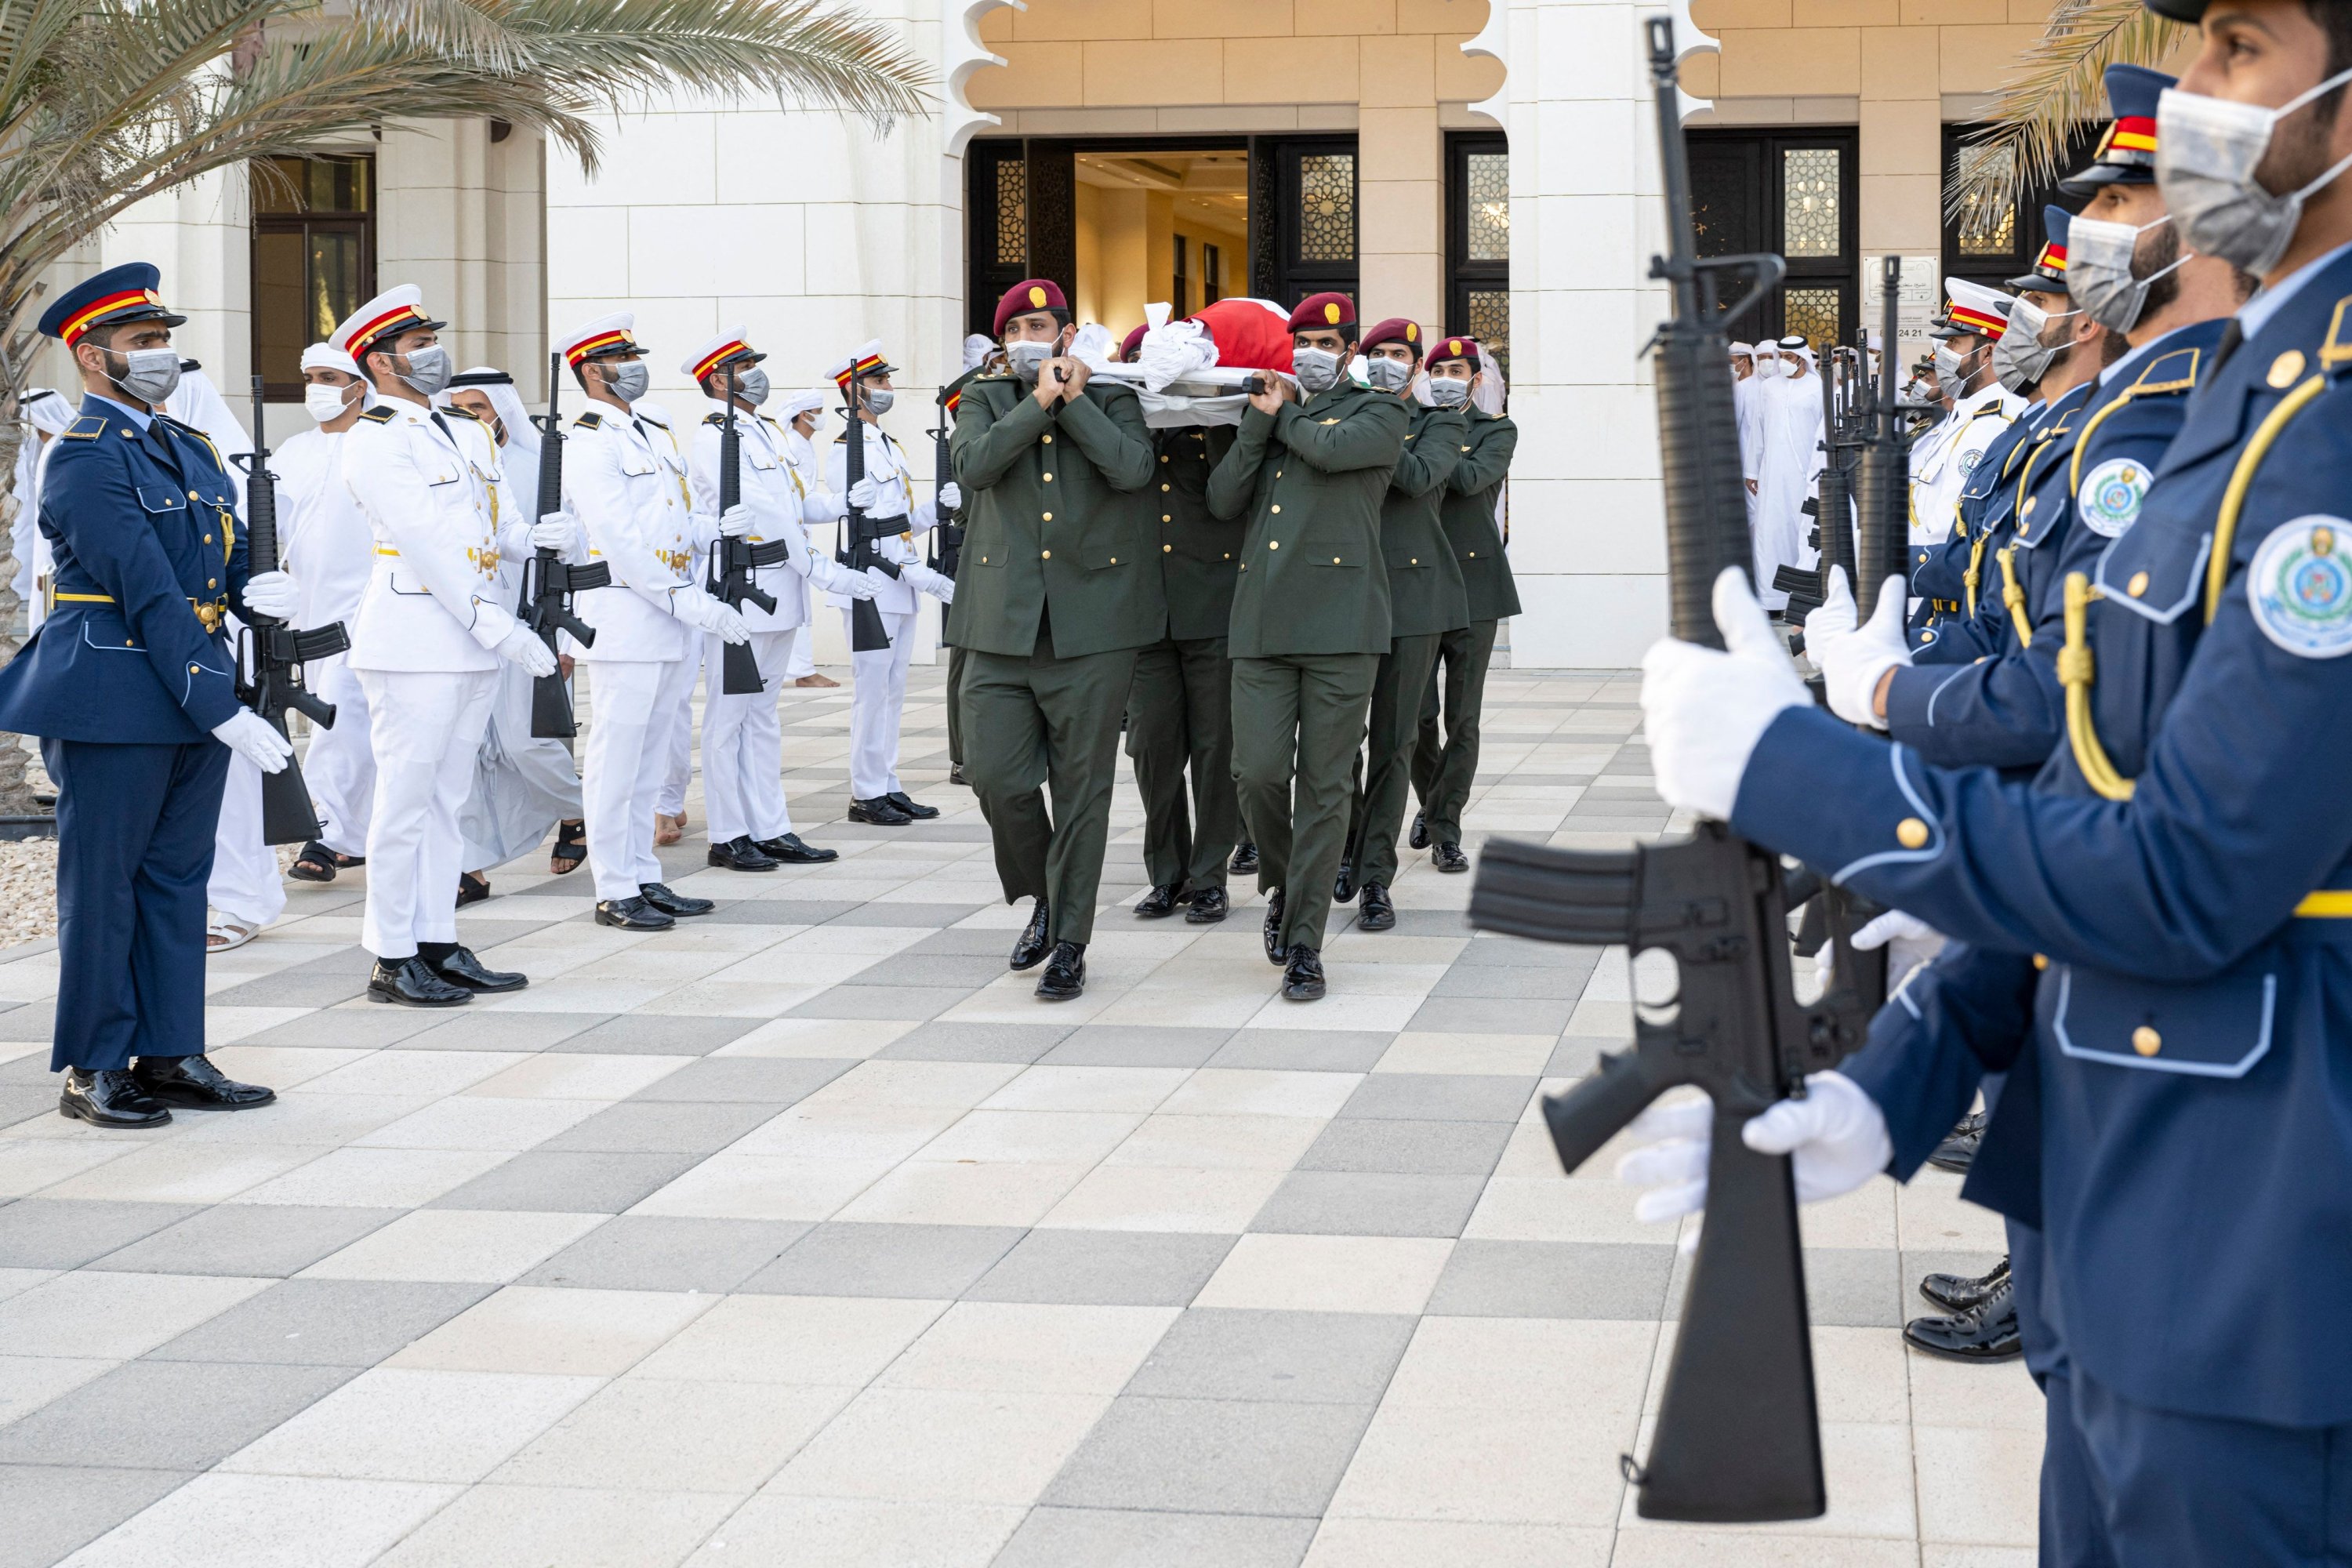 Sebuah gambar selebaran yang dirilis oleh Kementerian Urusan Kepresidenan UEA menunjukkan pengawal yang membawa jenazah mendiang Presiden UEA Sheikh Khalifa bin Zayed Al-Nahyan saat pemakamannya di Abu Dhabi pada 13 Mei 2022. (Foto oleh Hamad al-Kaabi / Kementerian Kepresidenan Urusan / AFP) /